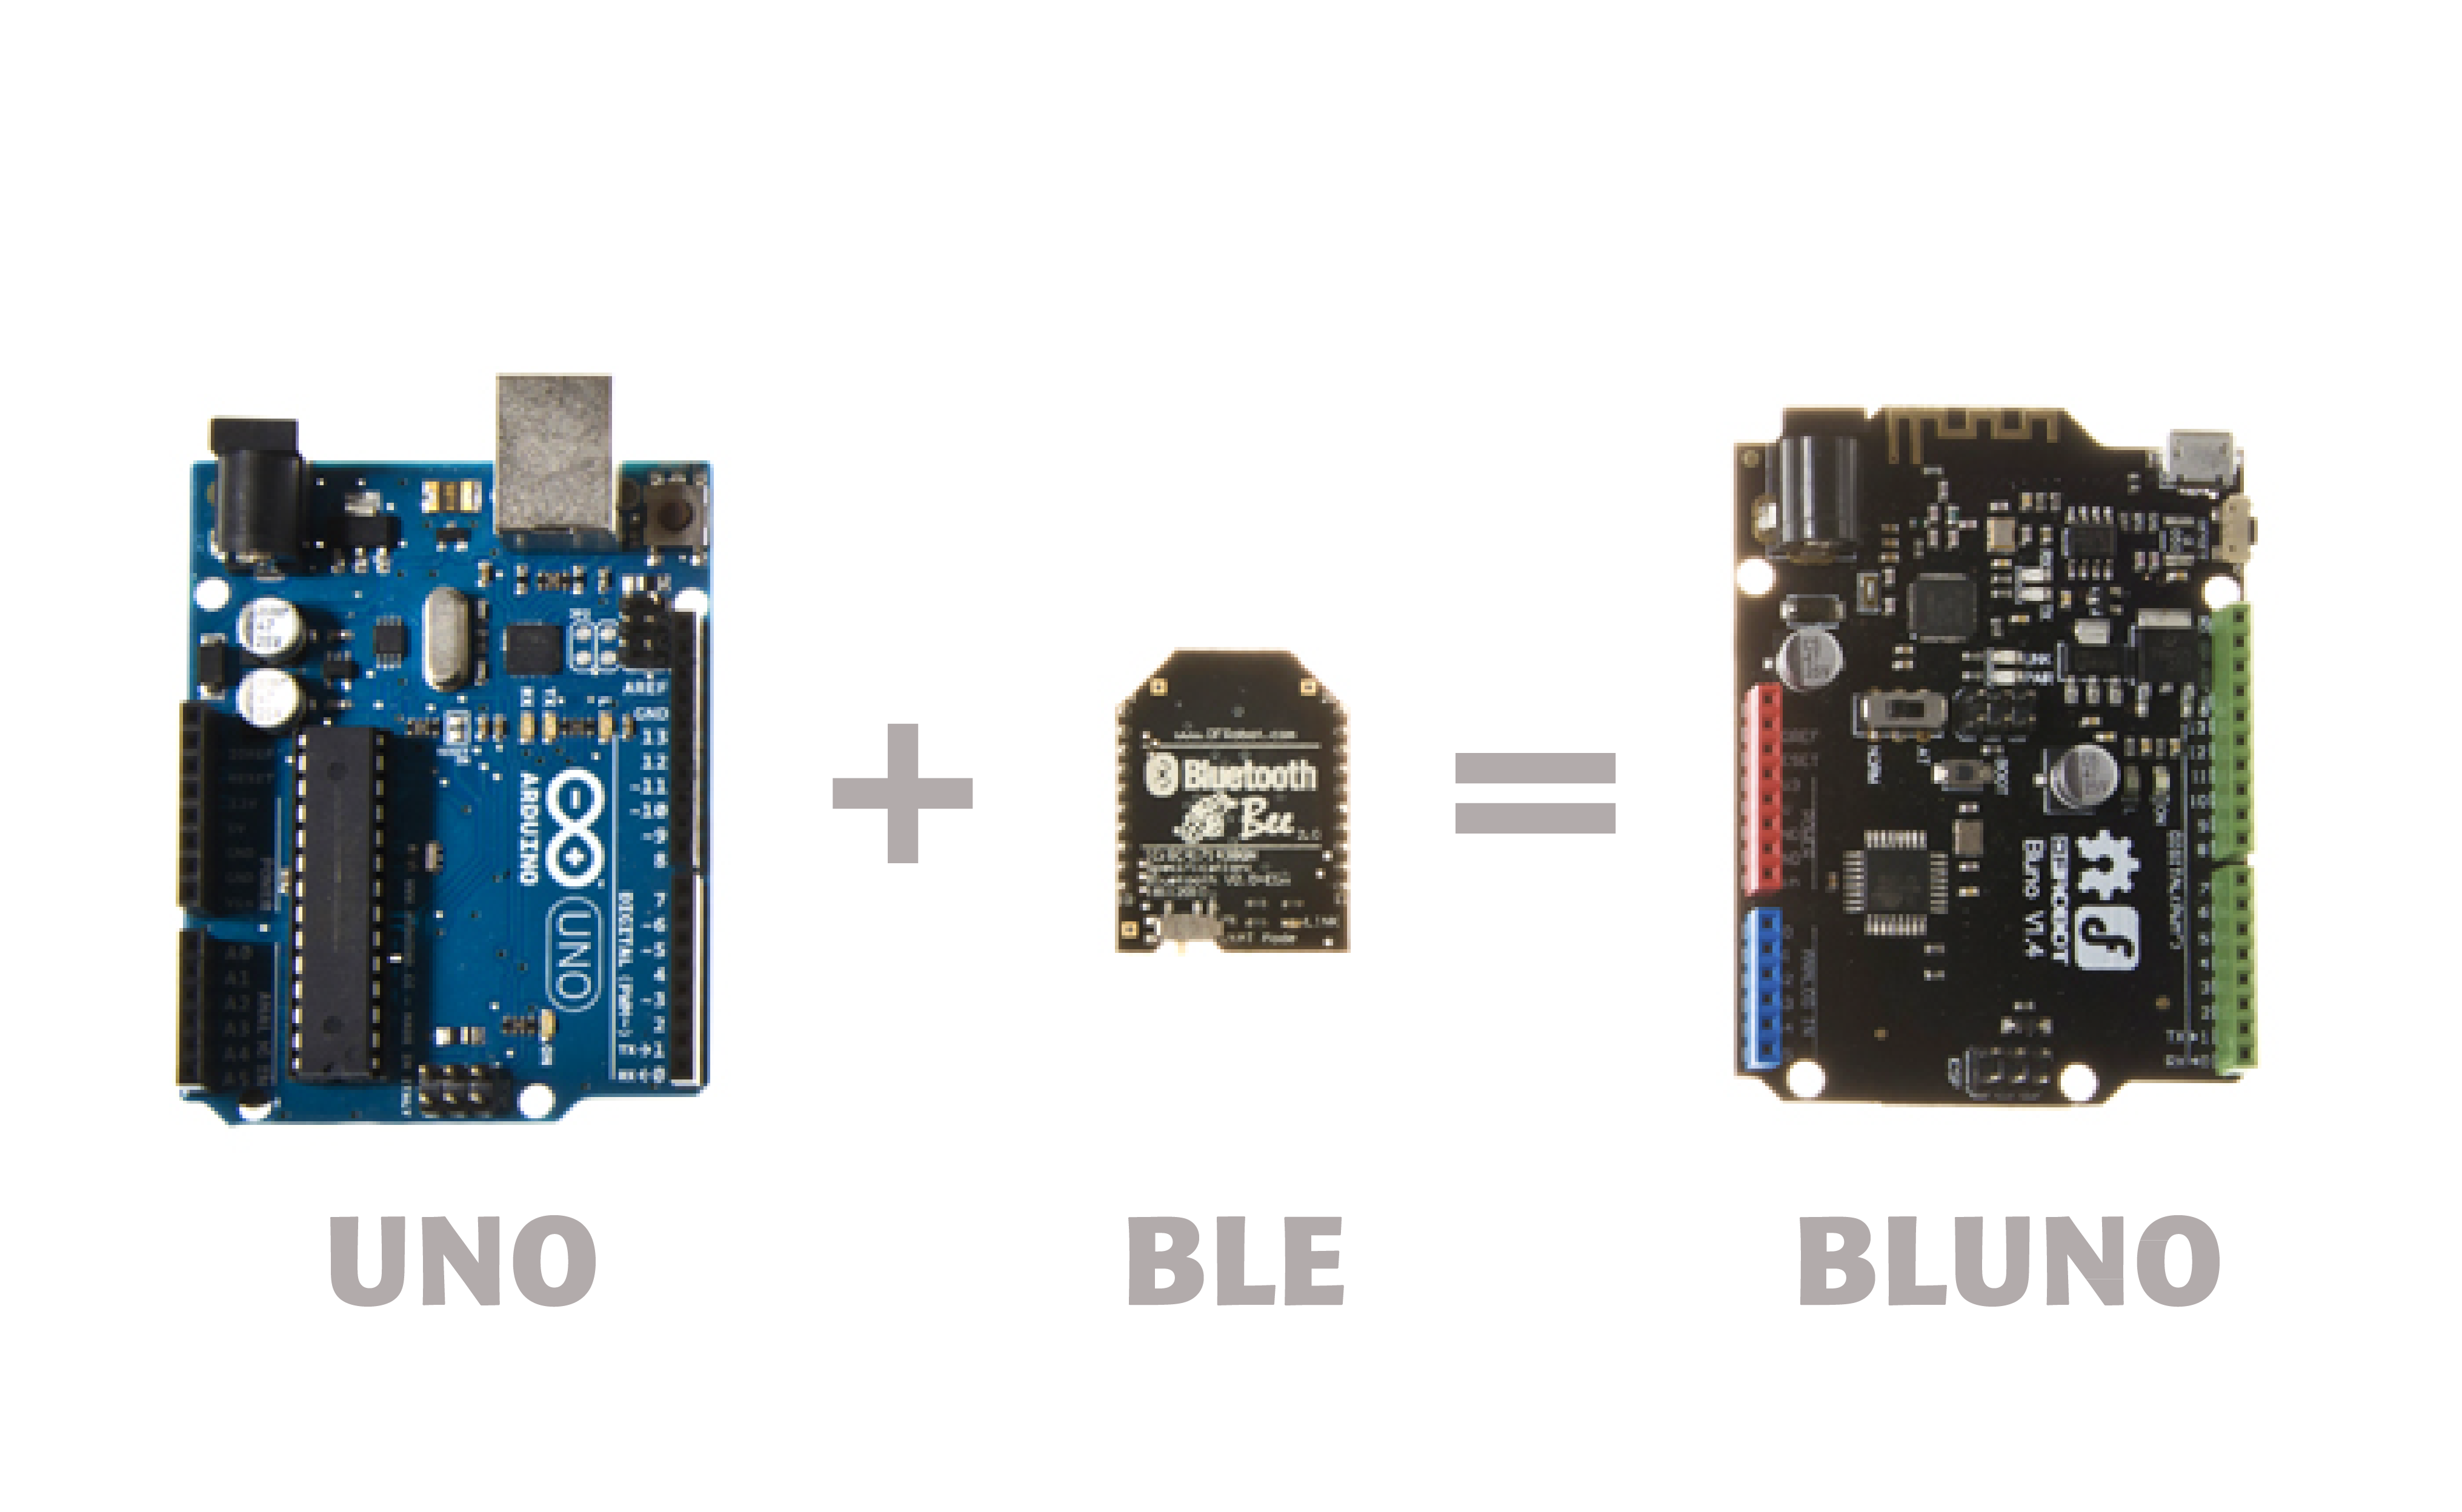 Bluno - An Arduino Bluetooth 4.0 (BLE) Board - DFRobot